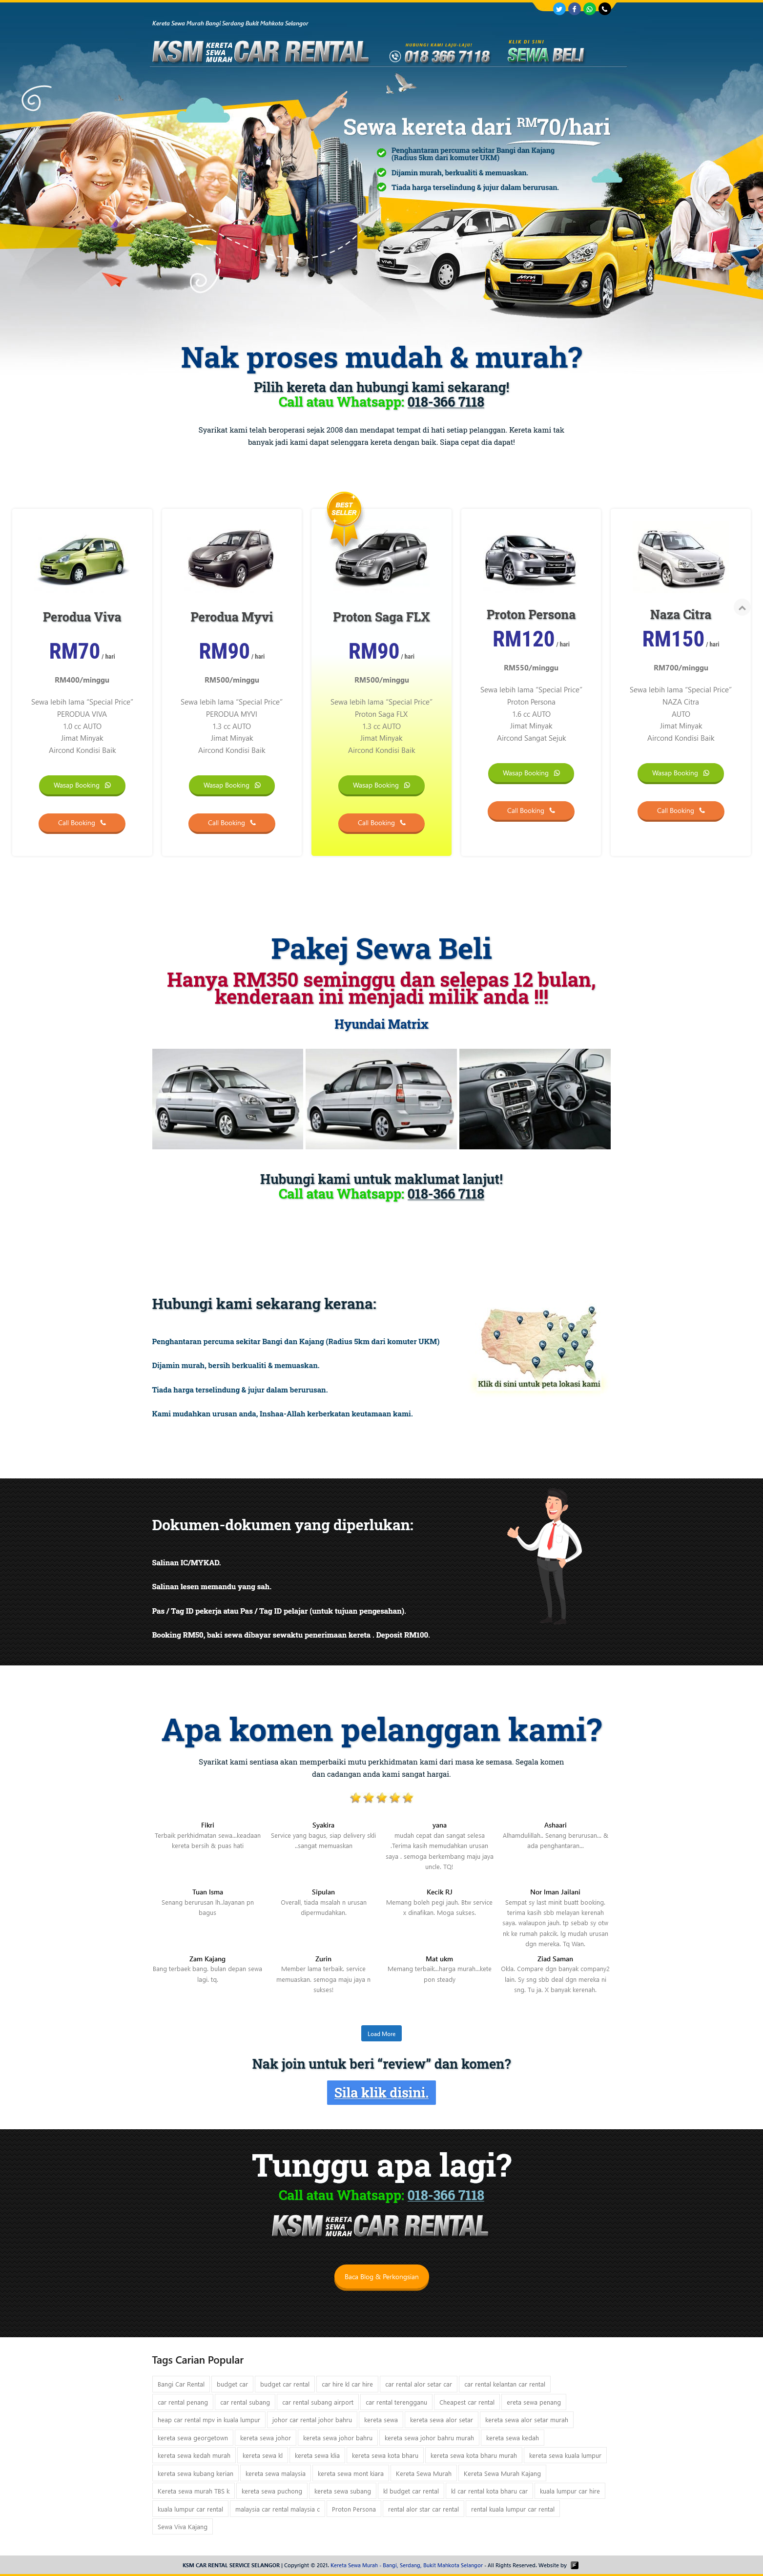 FIDO - Malaysia Freelance Web Designer Web Designer - Service Buat Website